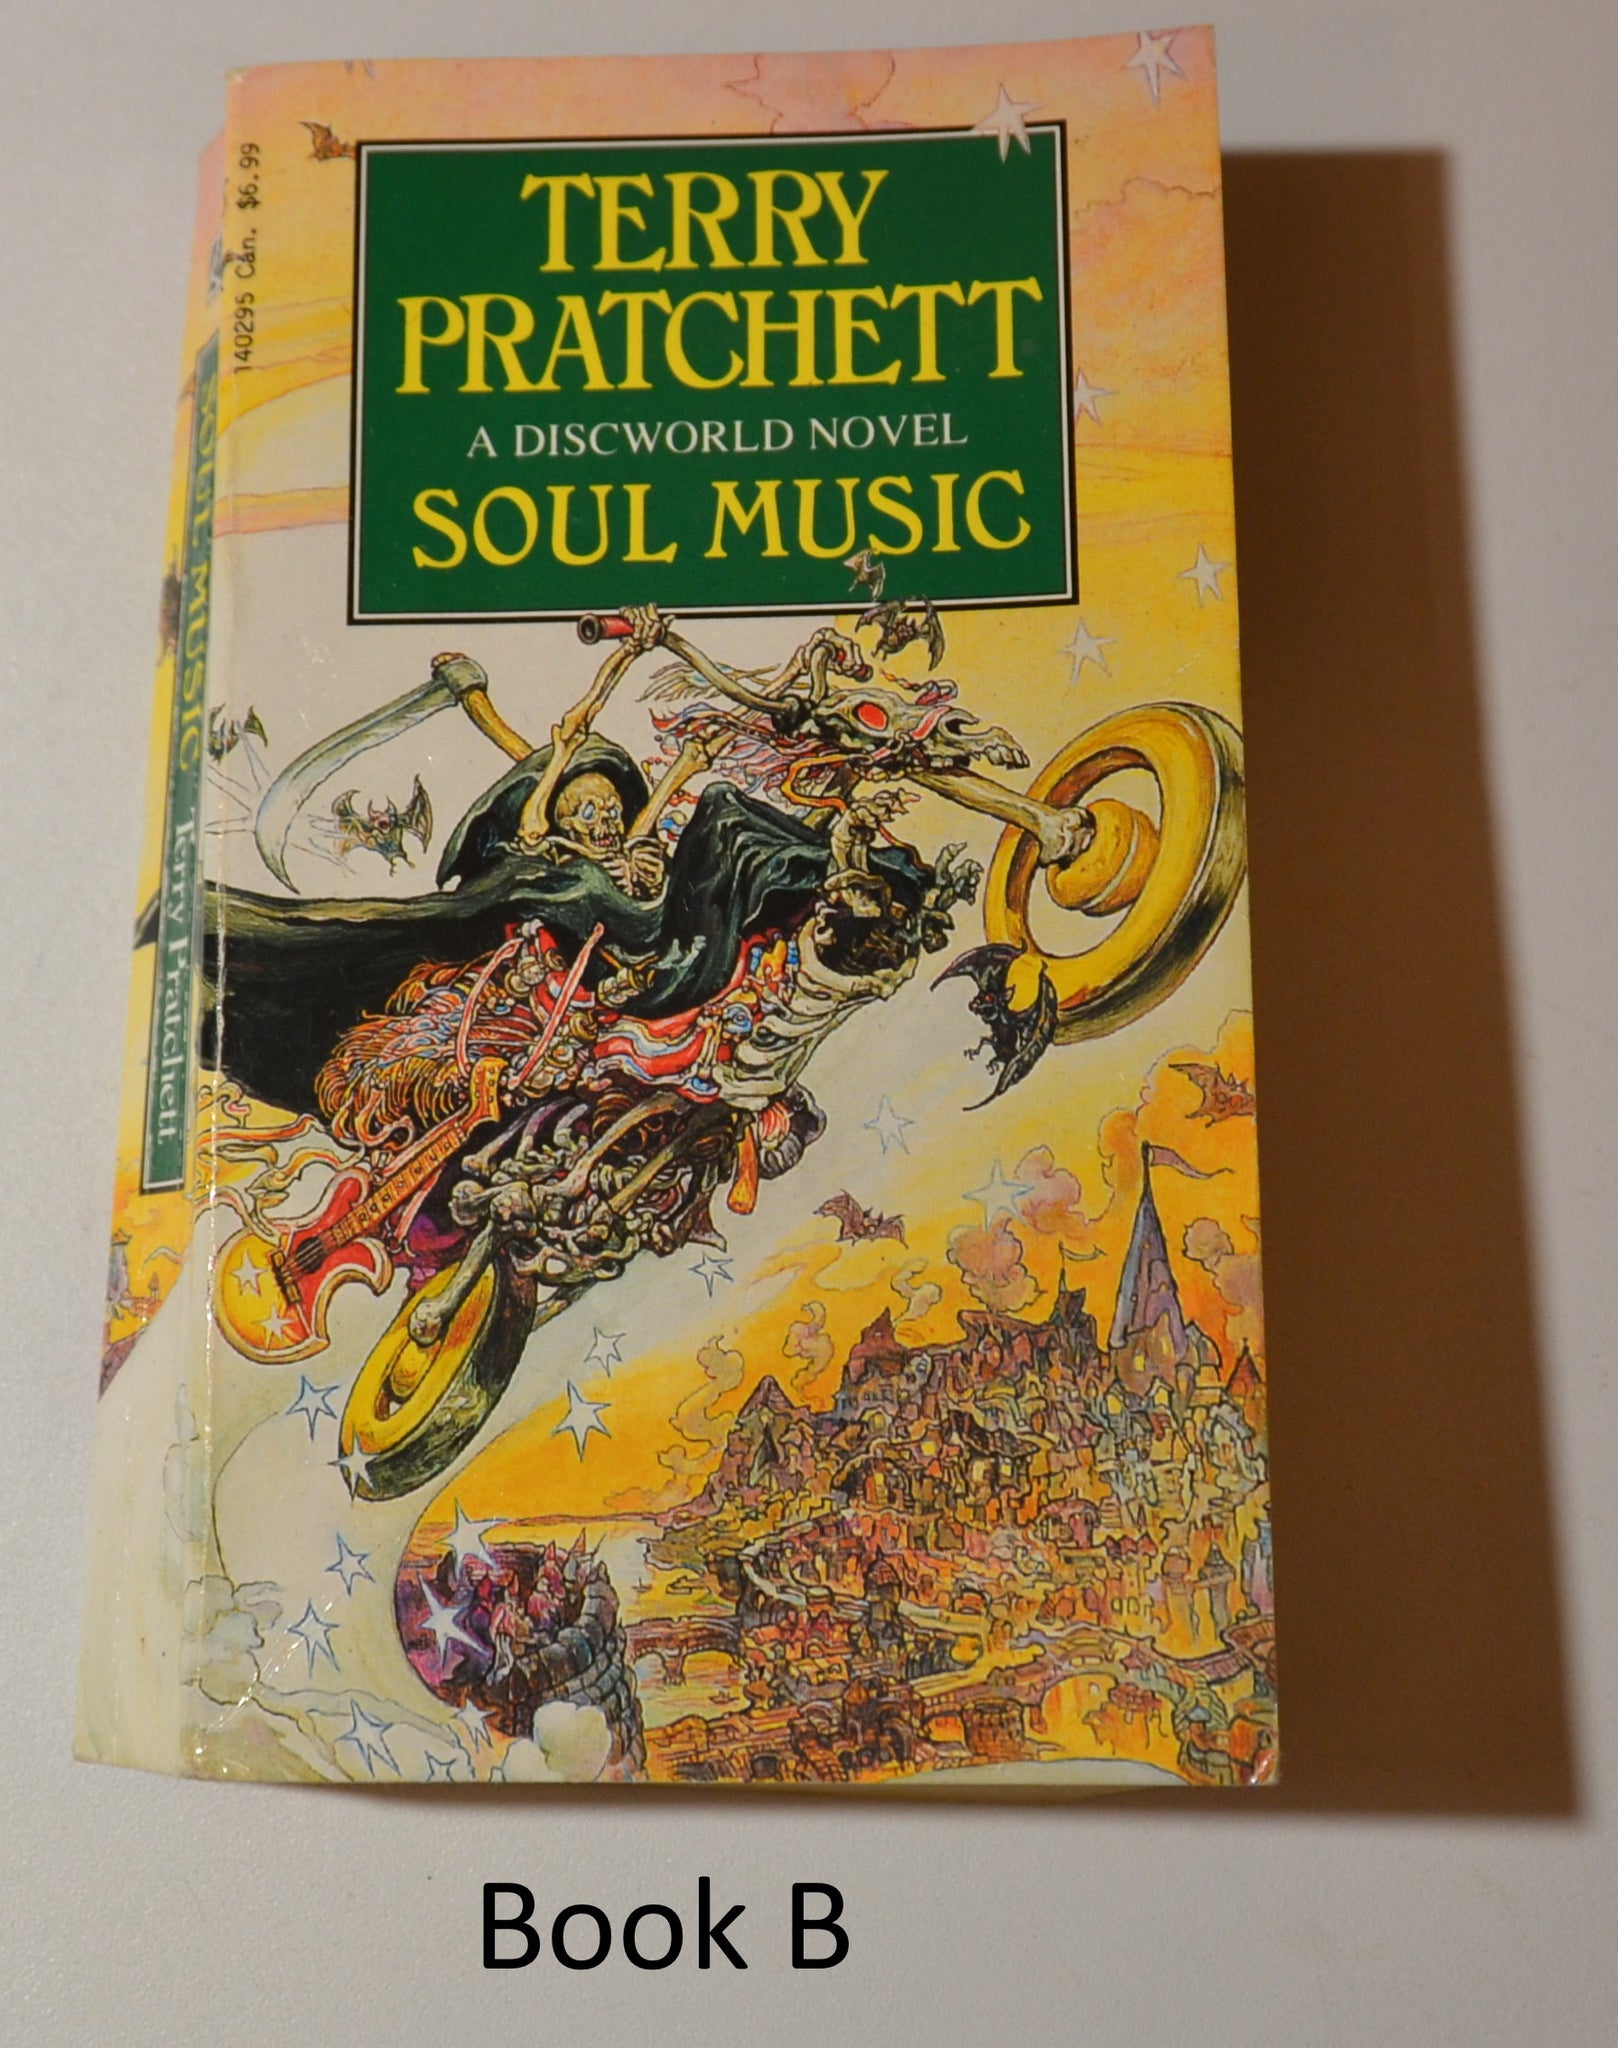 Soul Music - Discworld book 16